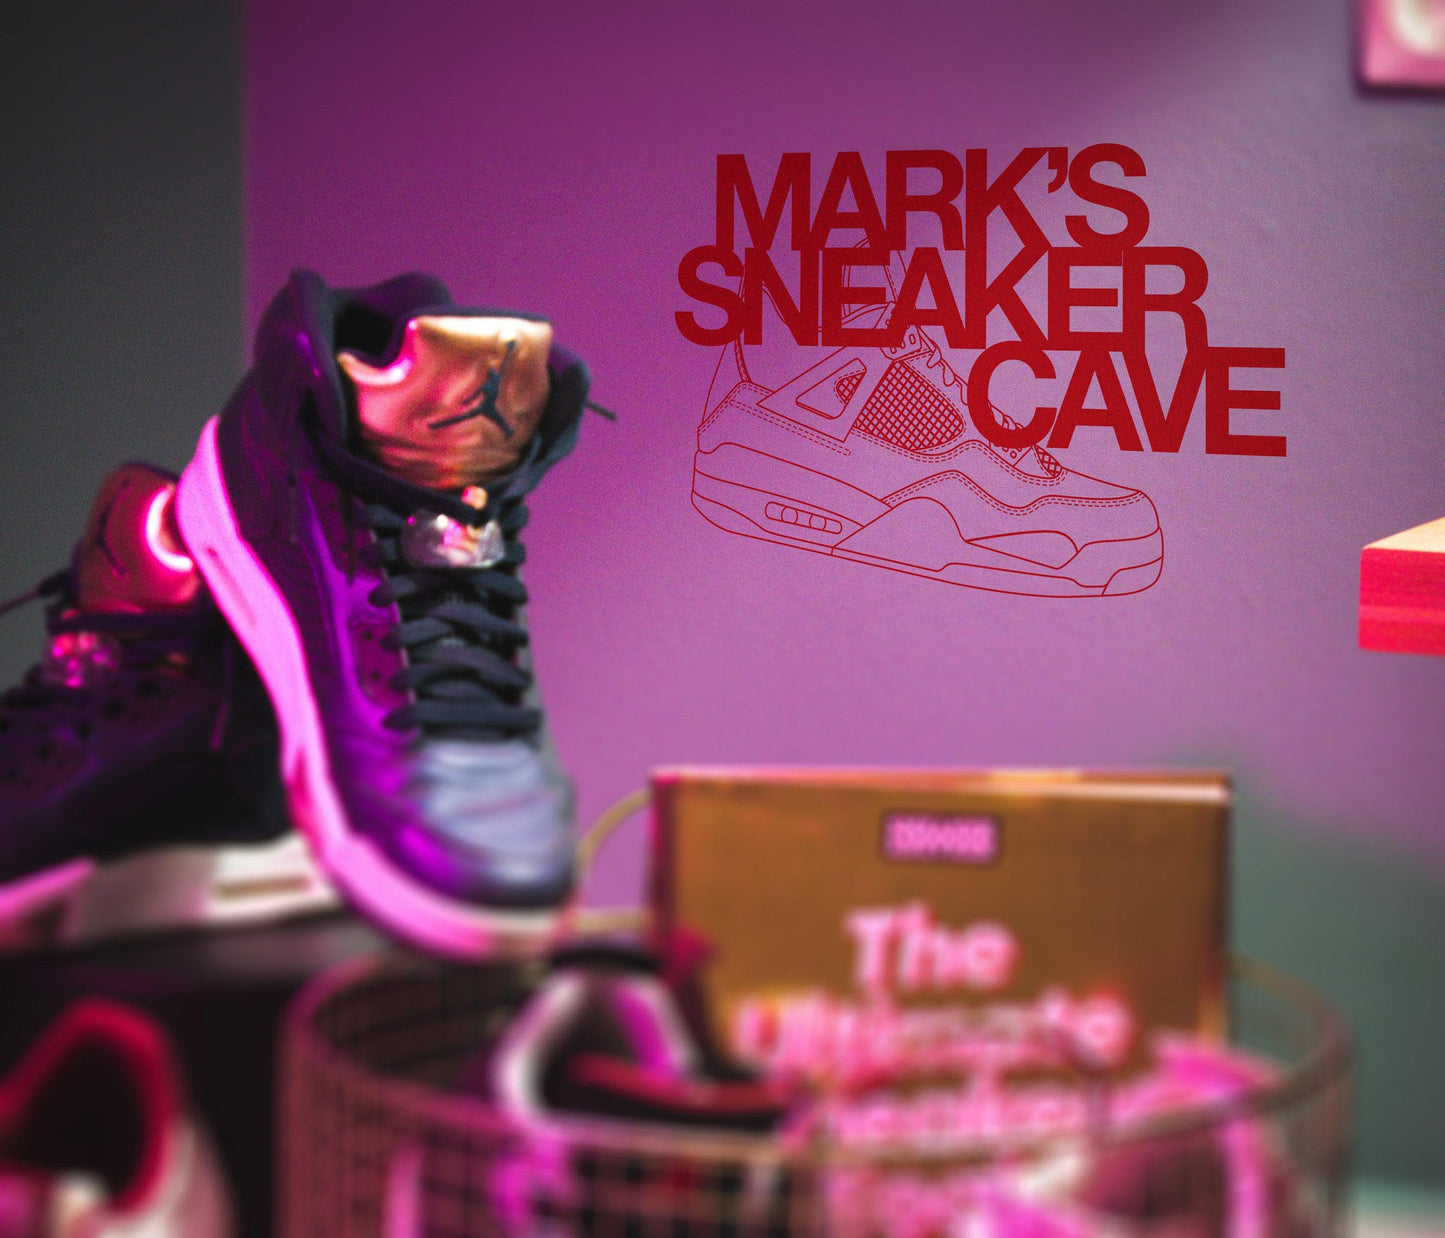 Sneakerhead Decor. Hypebeast Decor. Custom Personalized Name 'Sneaker Cave' Wall Decal Sticker. #6636